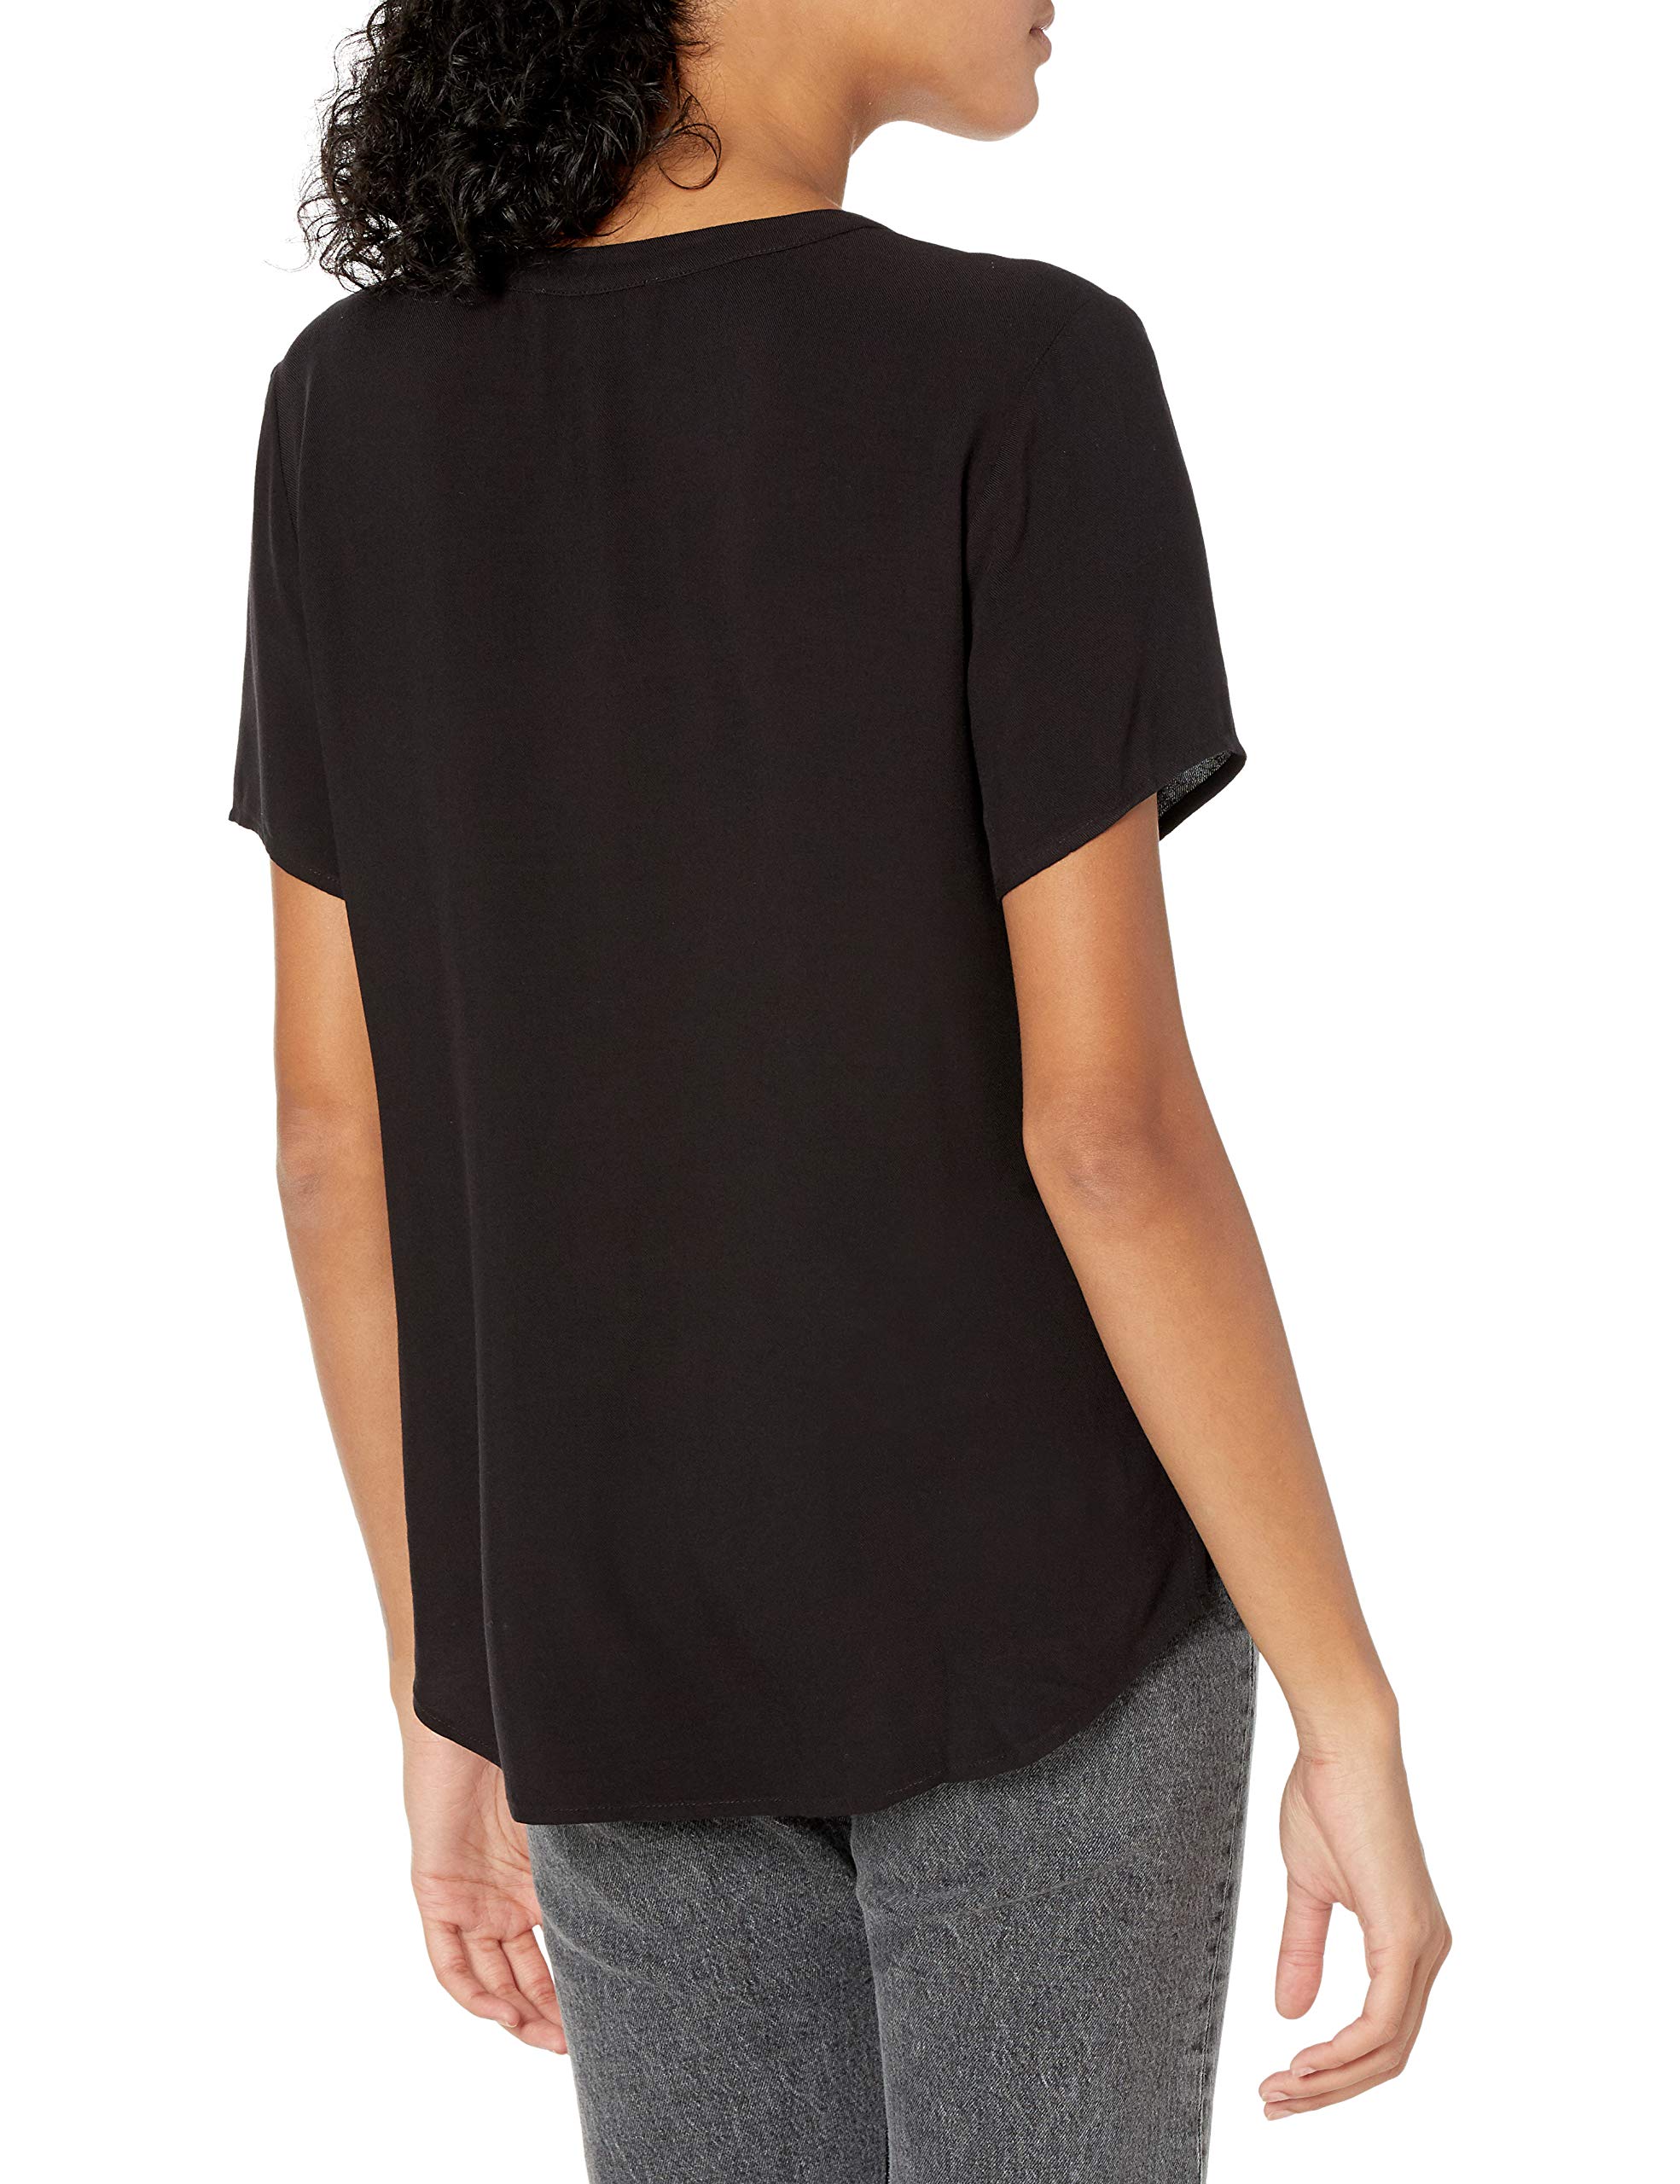 Amazon Essentials Women's Short-Sleeve Woven Blouse